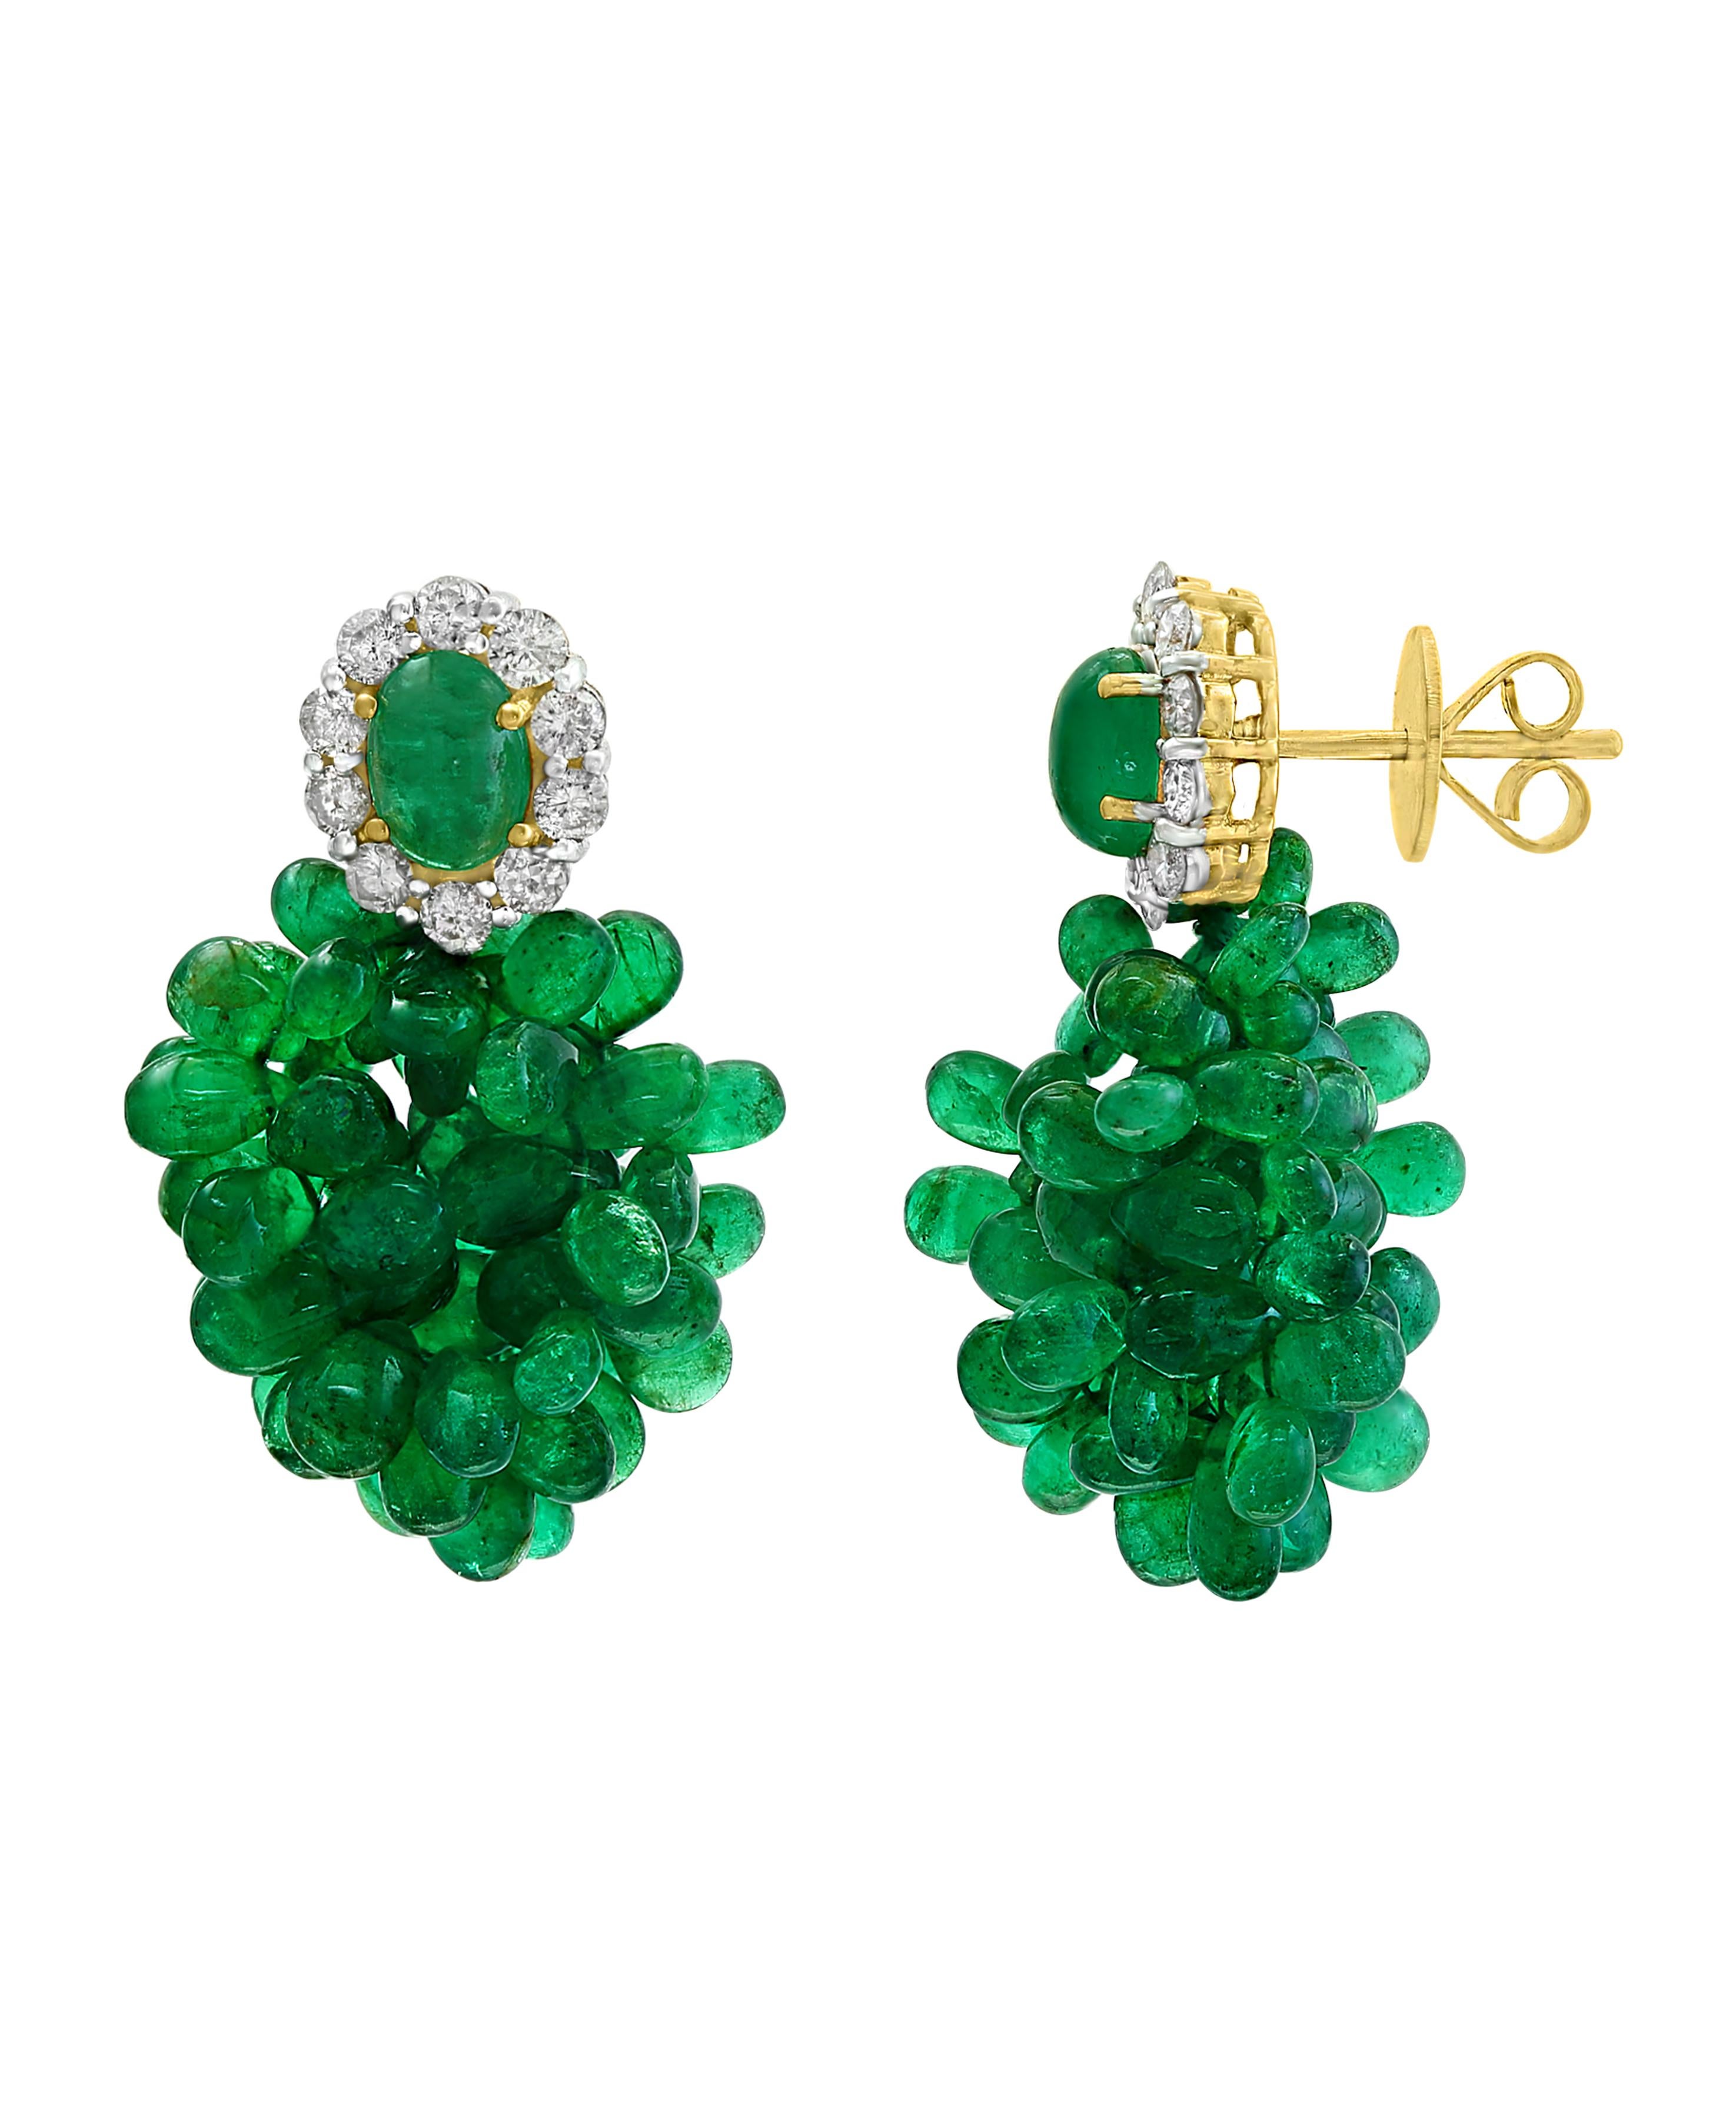 Oval Cut Colombian Emerald Briolette and Diamond Hanging Earrings 18 Karat Gold